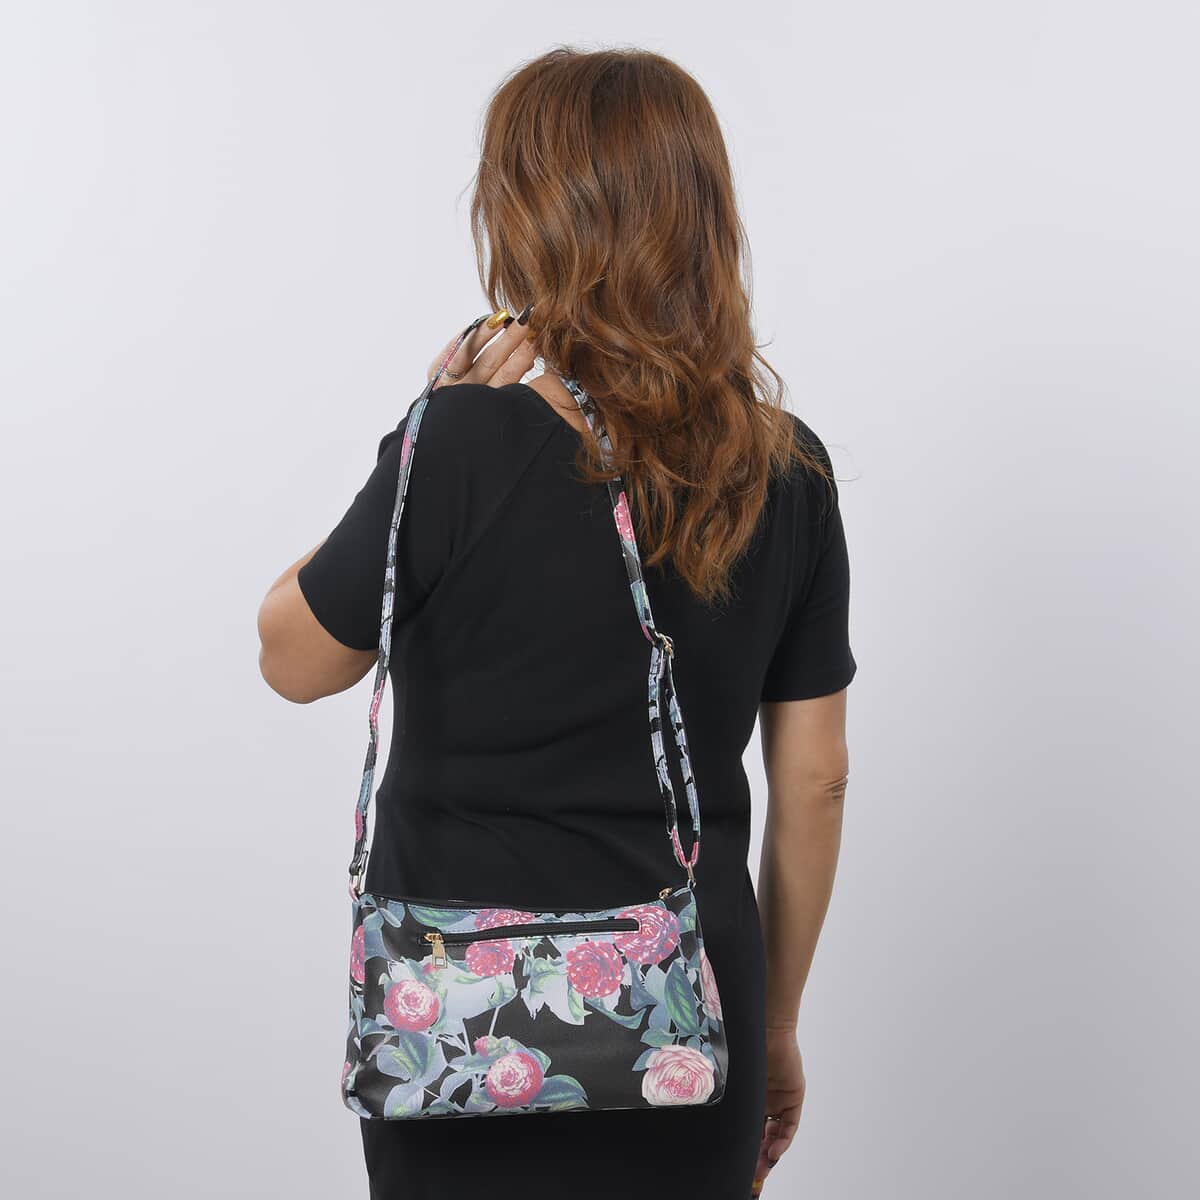 Black Floral Embossed Pattern Faux Leather Crossbody Bag (12"x2.5"x7") With Adjustable Shoulder Strap image number 2